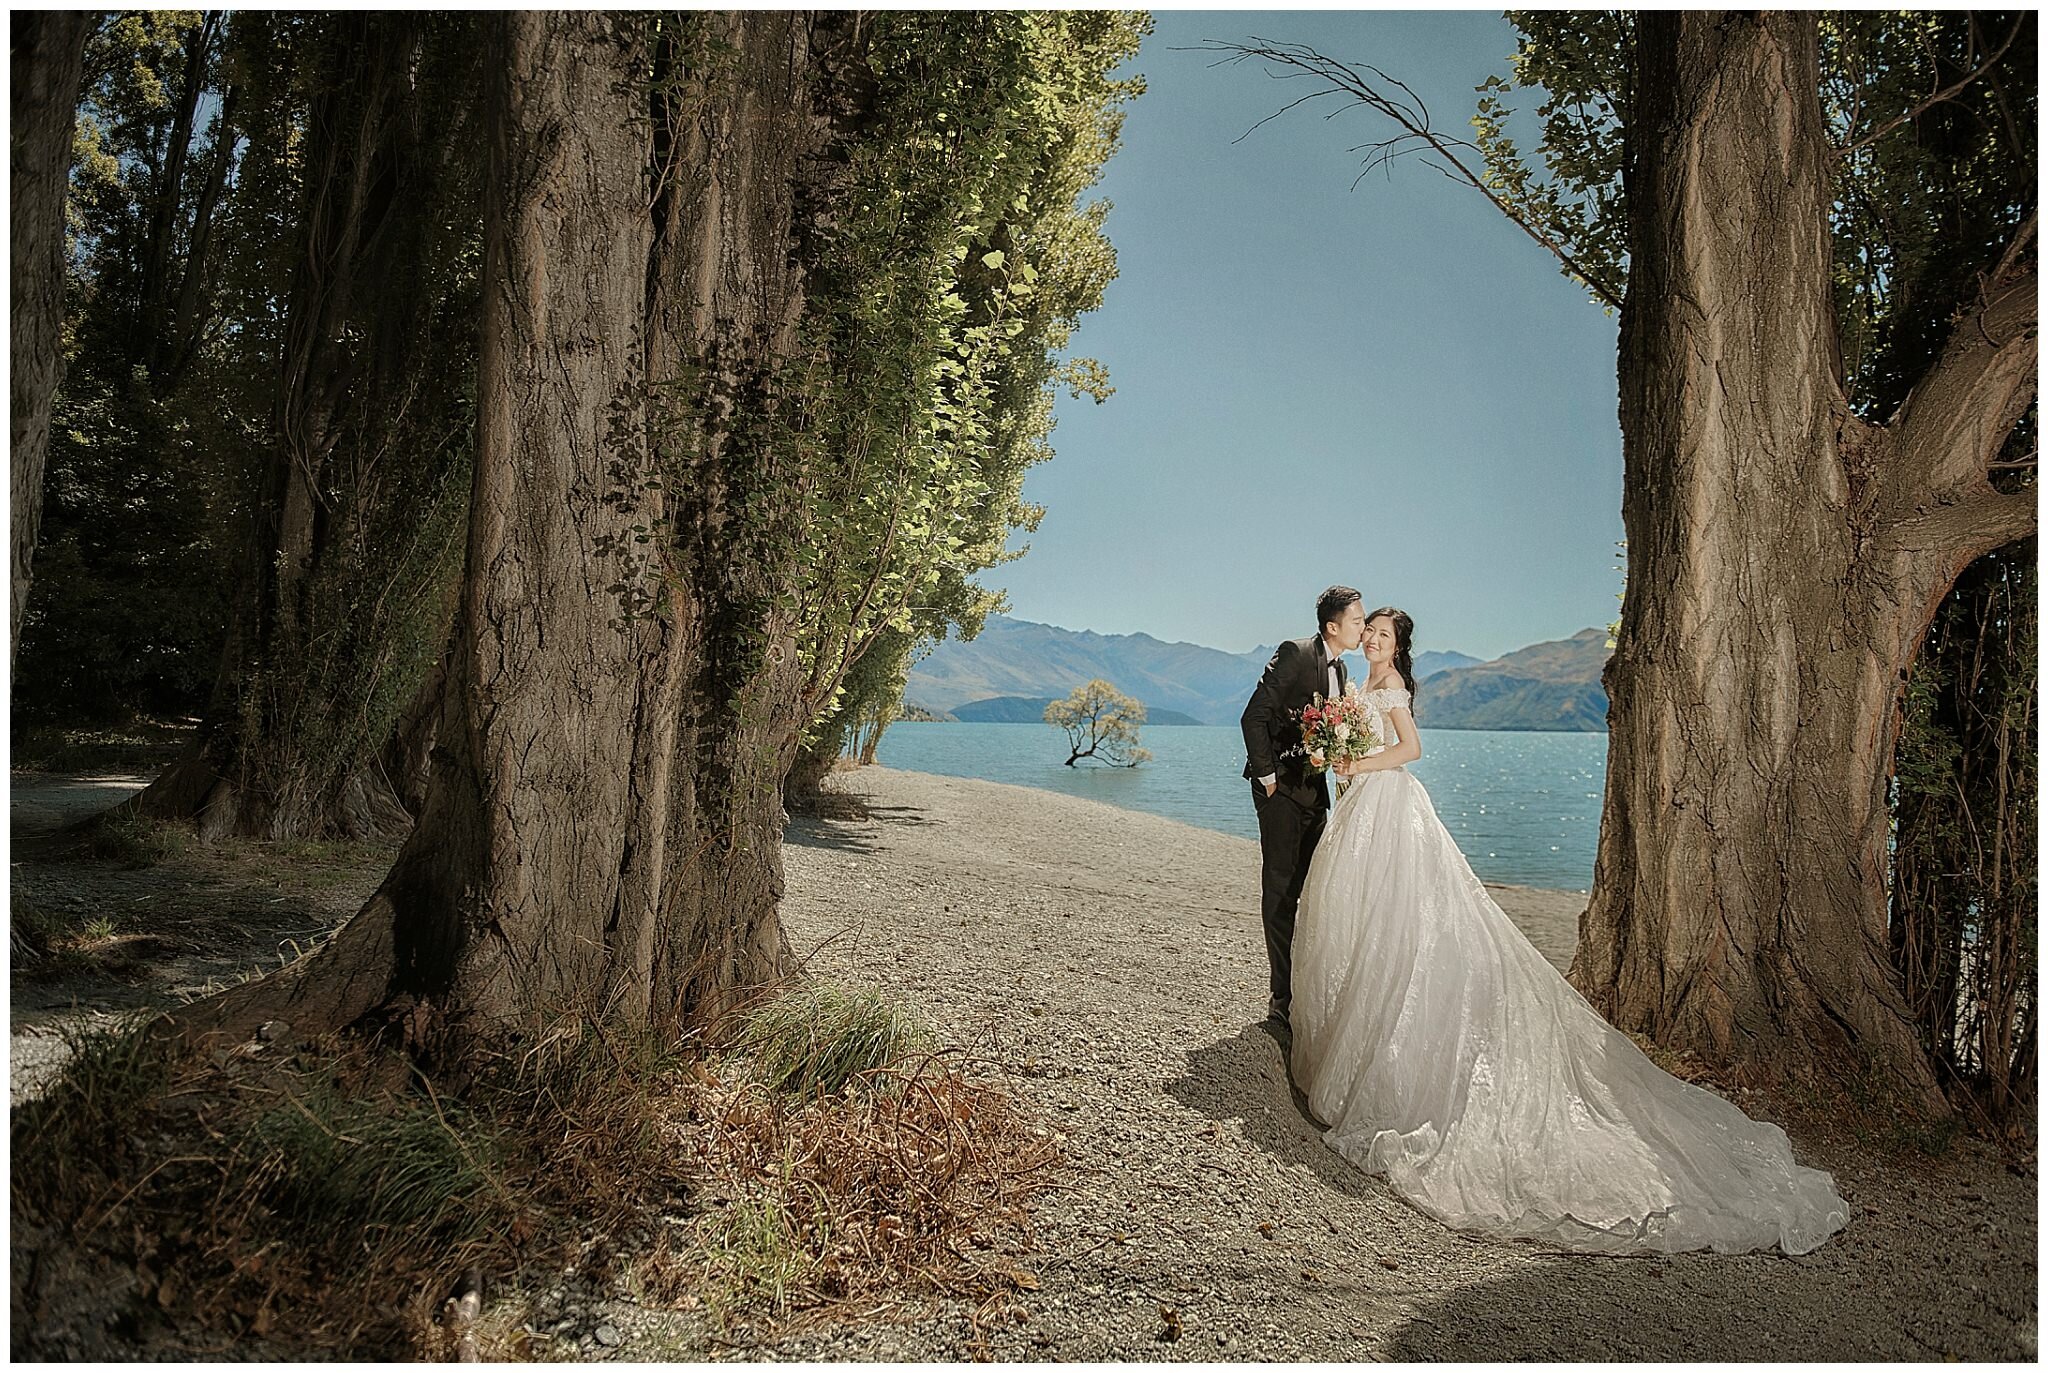 Queenstown &amp; Tekapo Pre-Wedding Shoot in the South Island New Zealand (Copy)